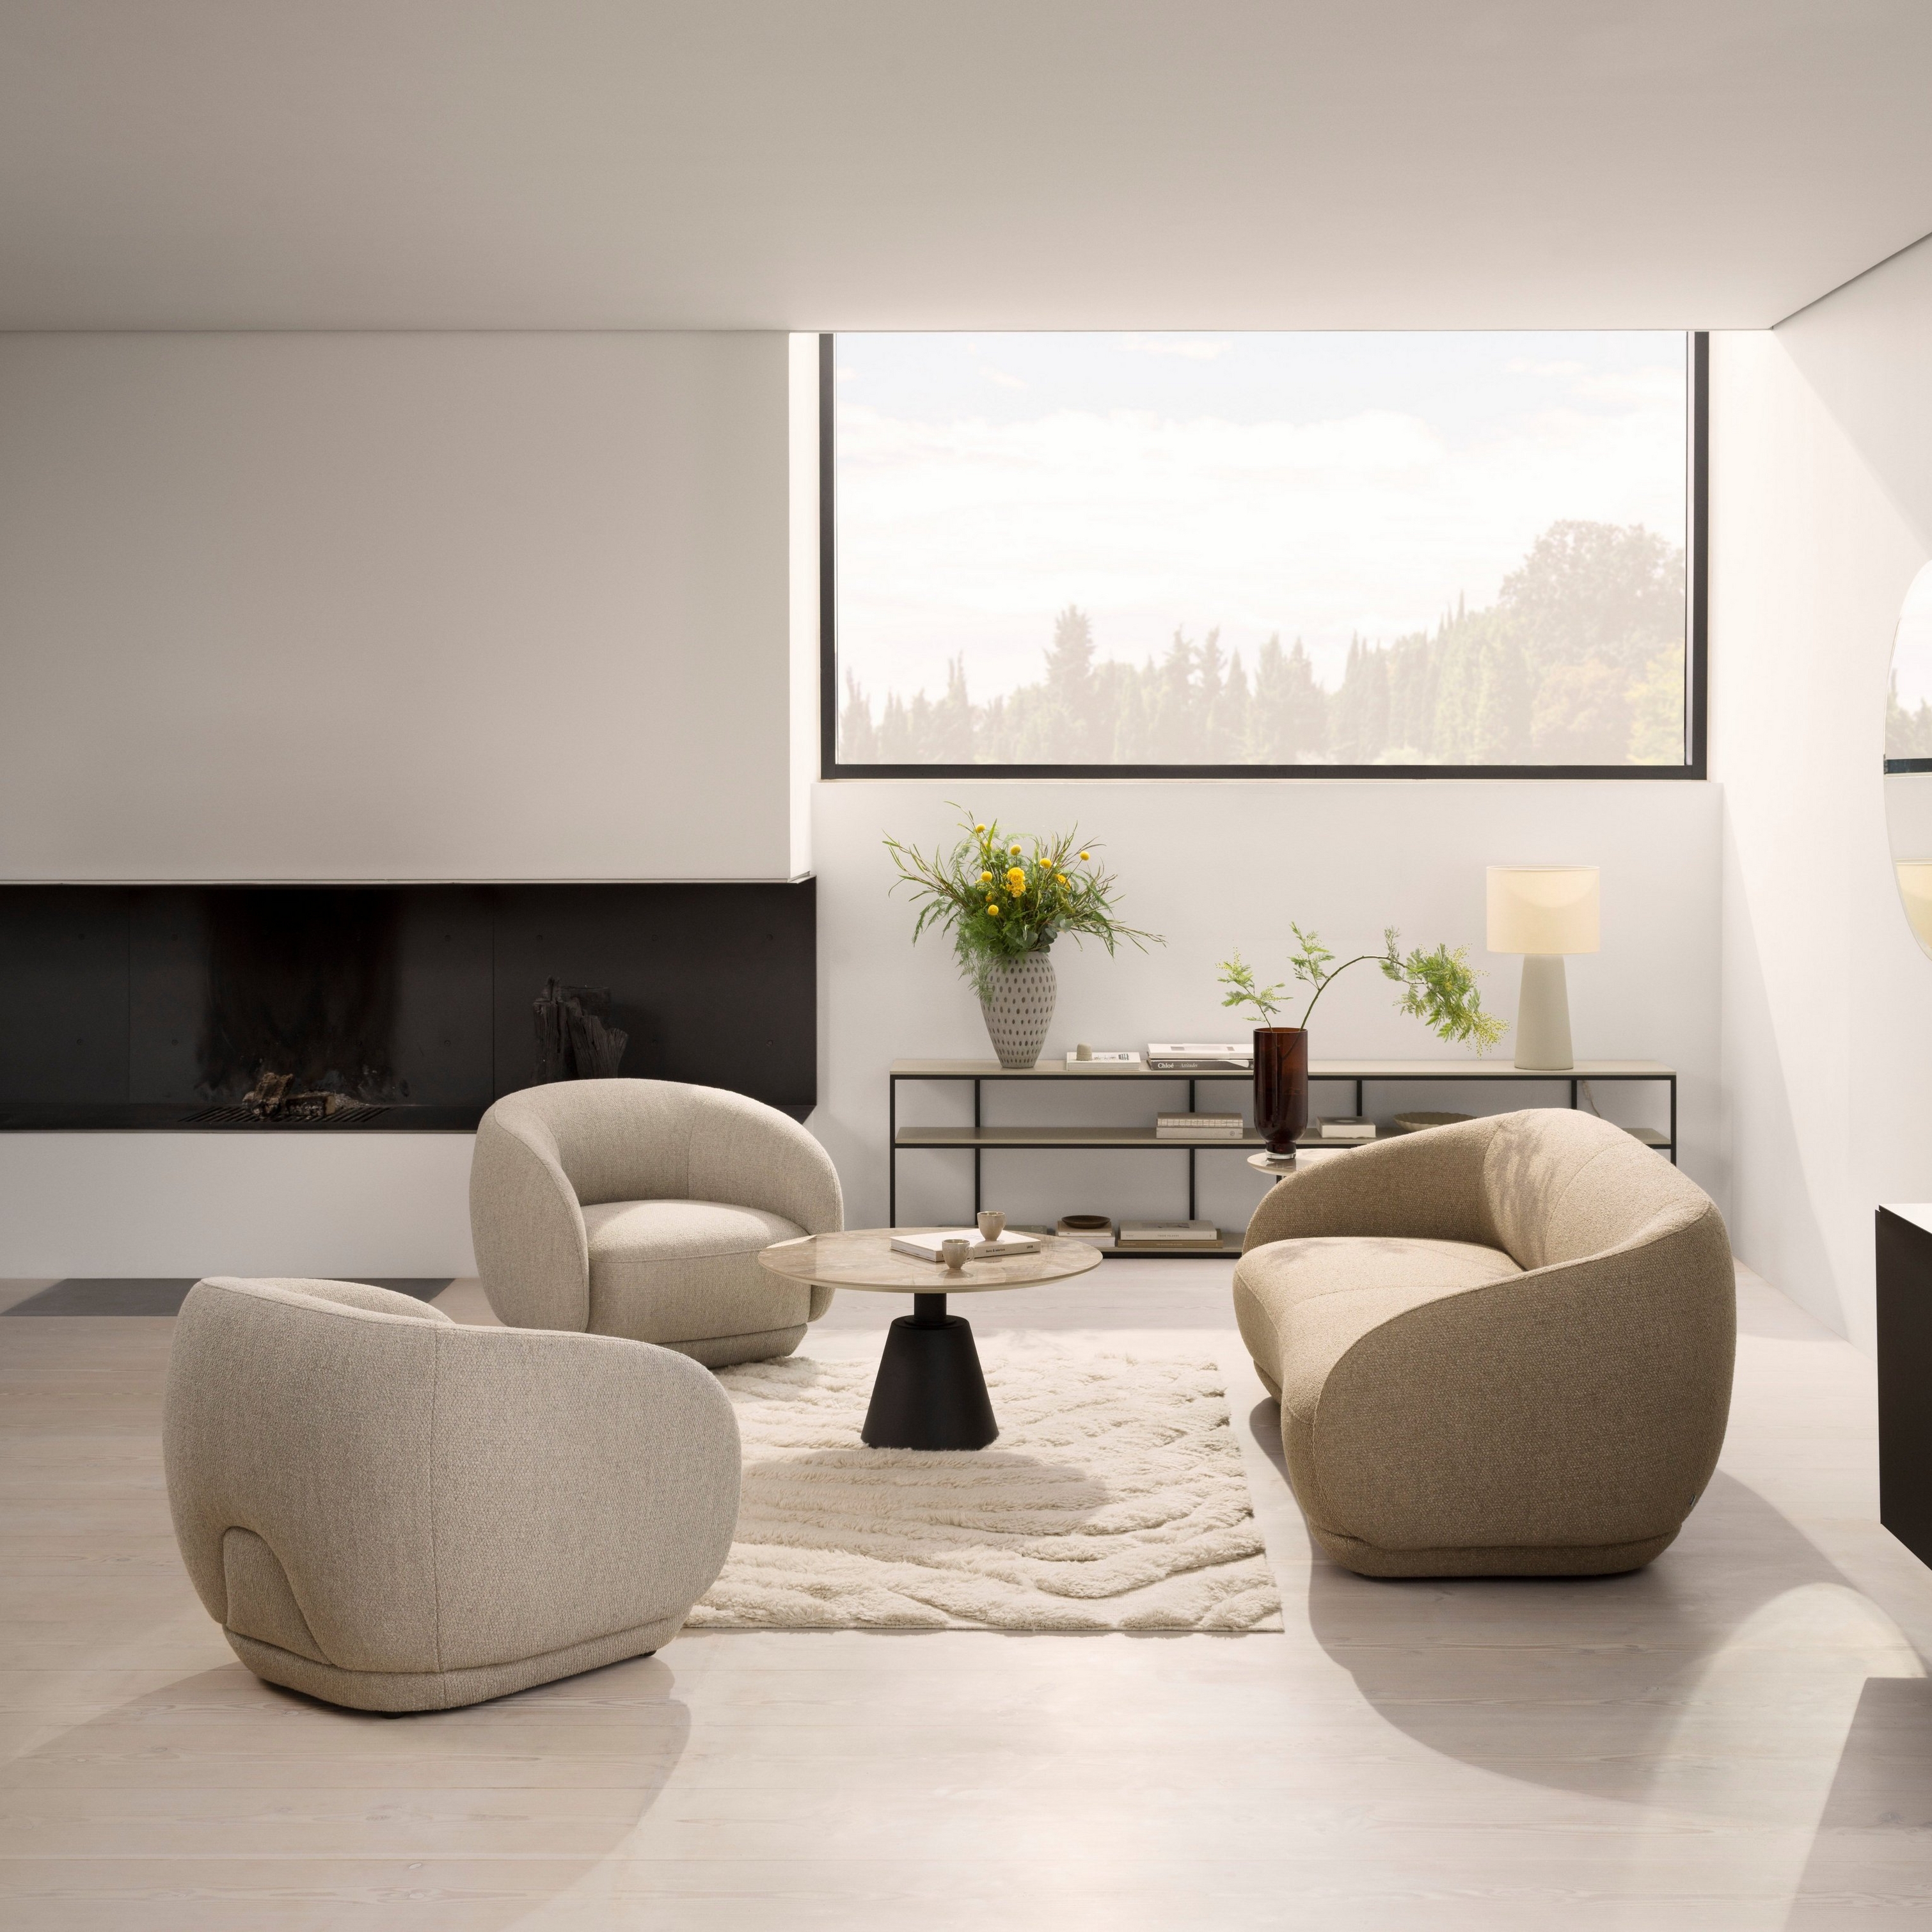 Salon confortable et contemporain avec le canapé Bolzano et le fauteuil Bolzano.